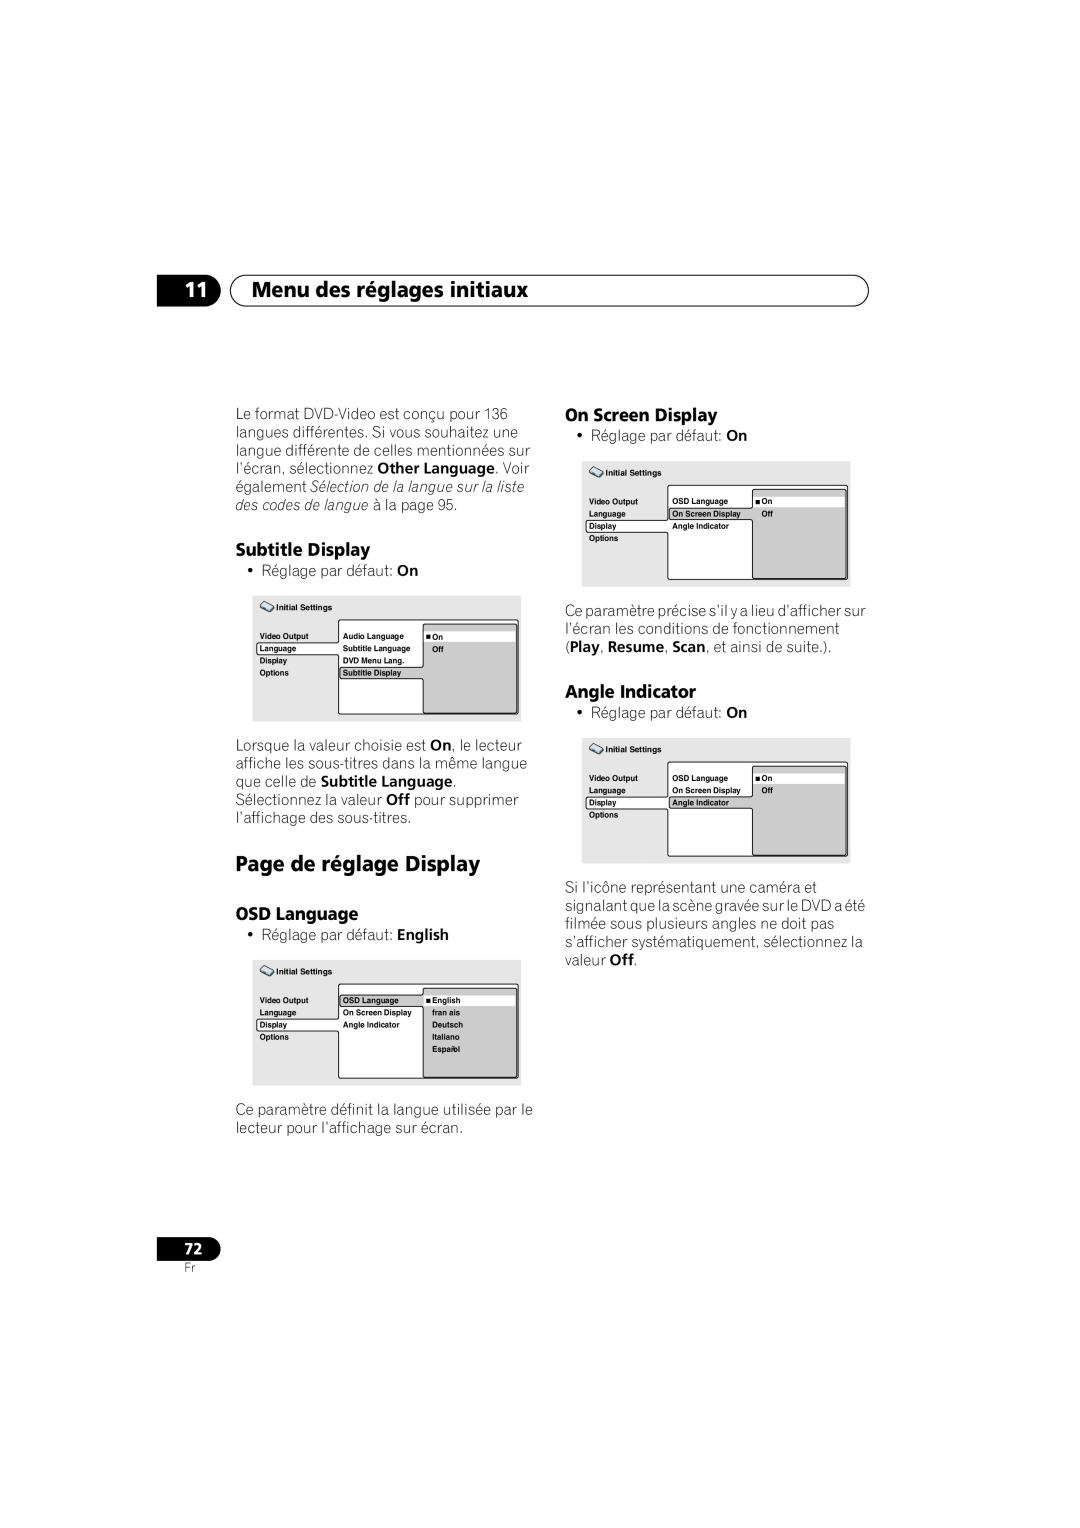 Pioneer S-DV990ST Page de réglage Display, 11Menu des réglages initiaux, Subtitle Display, OSD Language, On Screen Display 